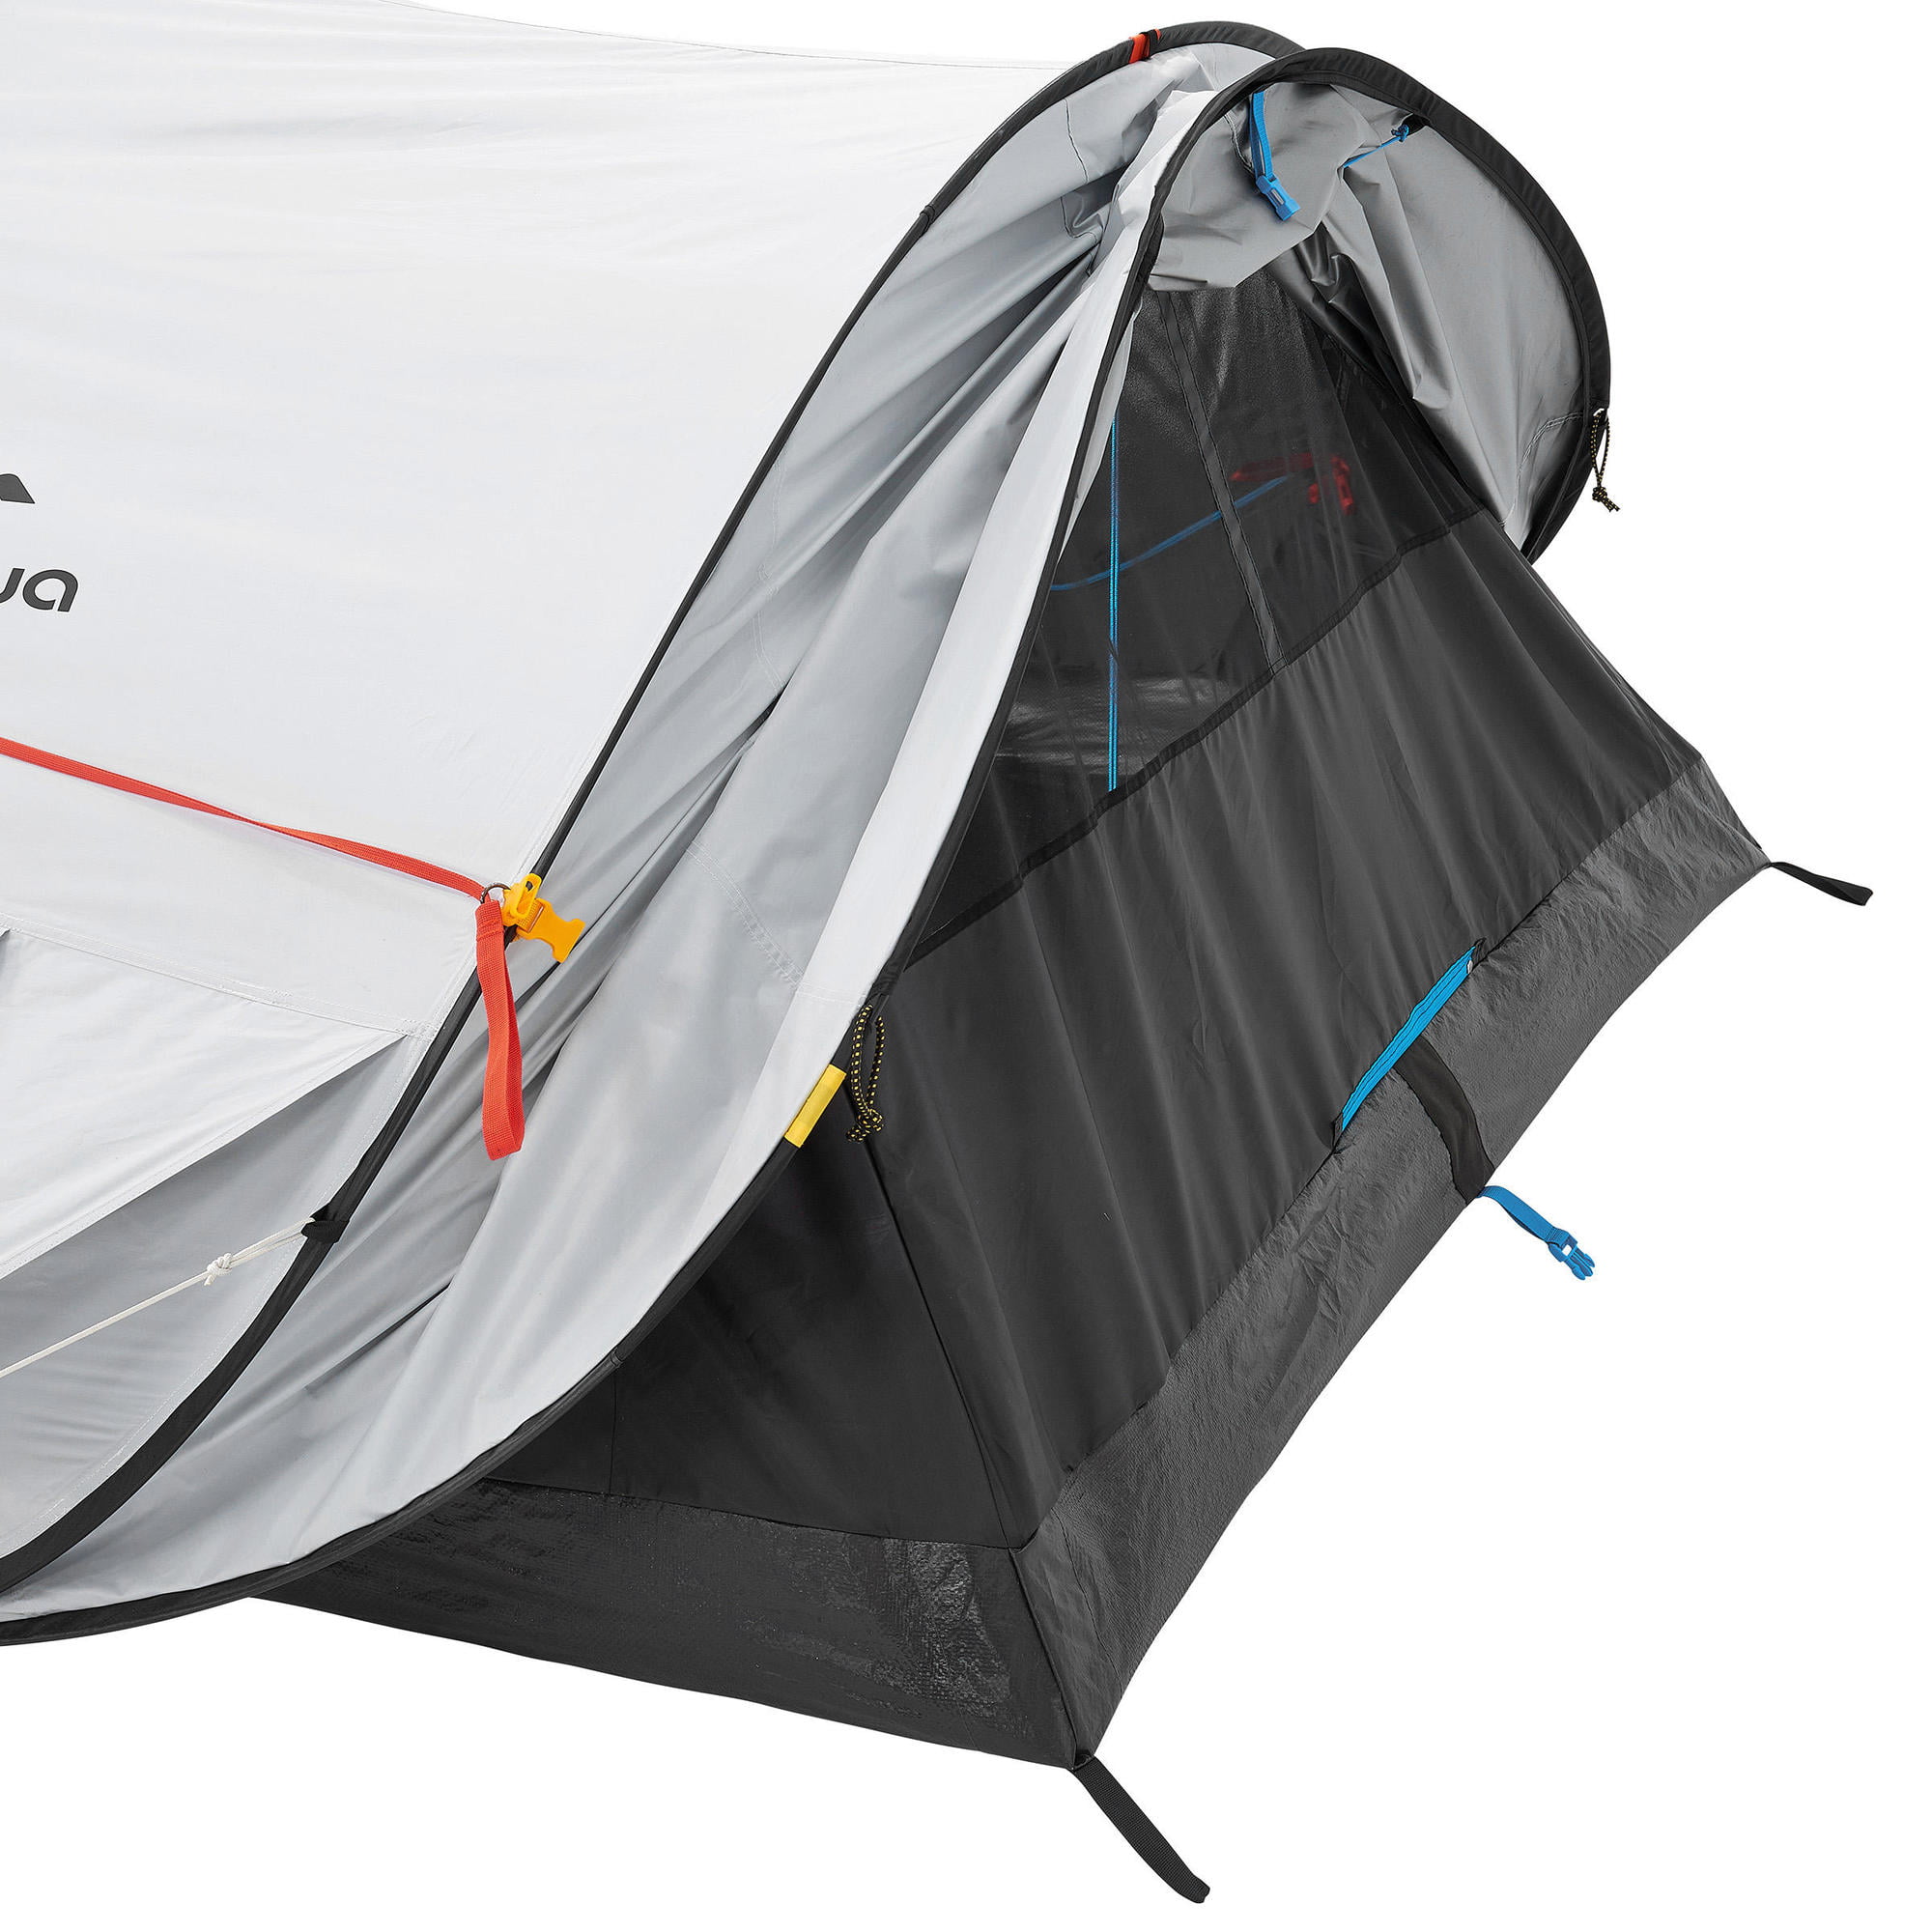 Decathlon - Quechua 2 Second & Black, Instant Pop-Up Tent, Waterproof, White - Walmart.com